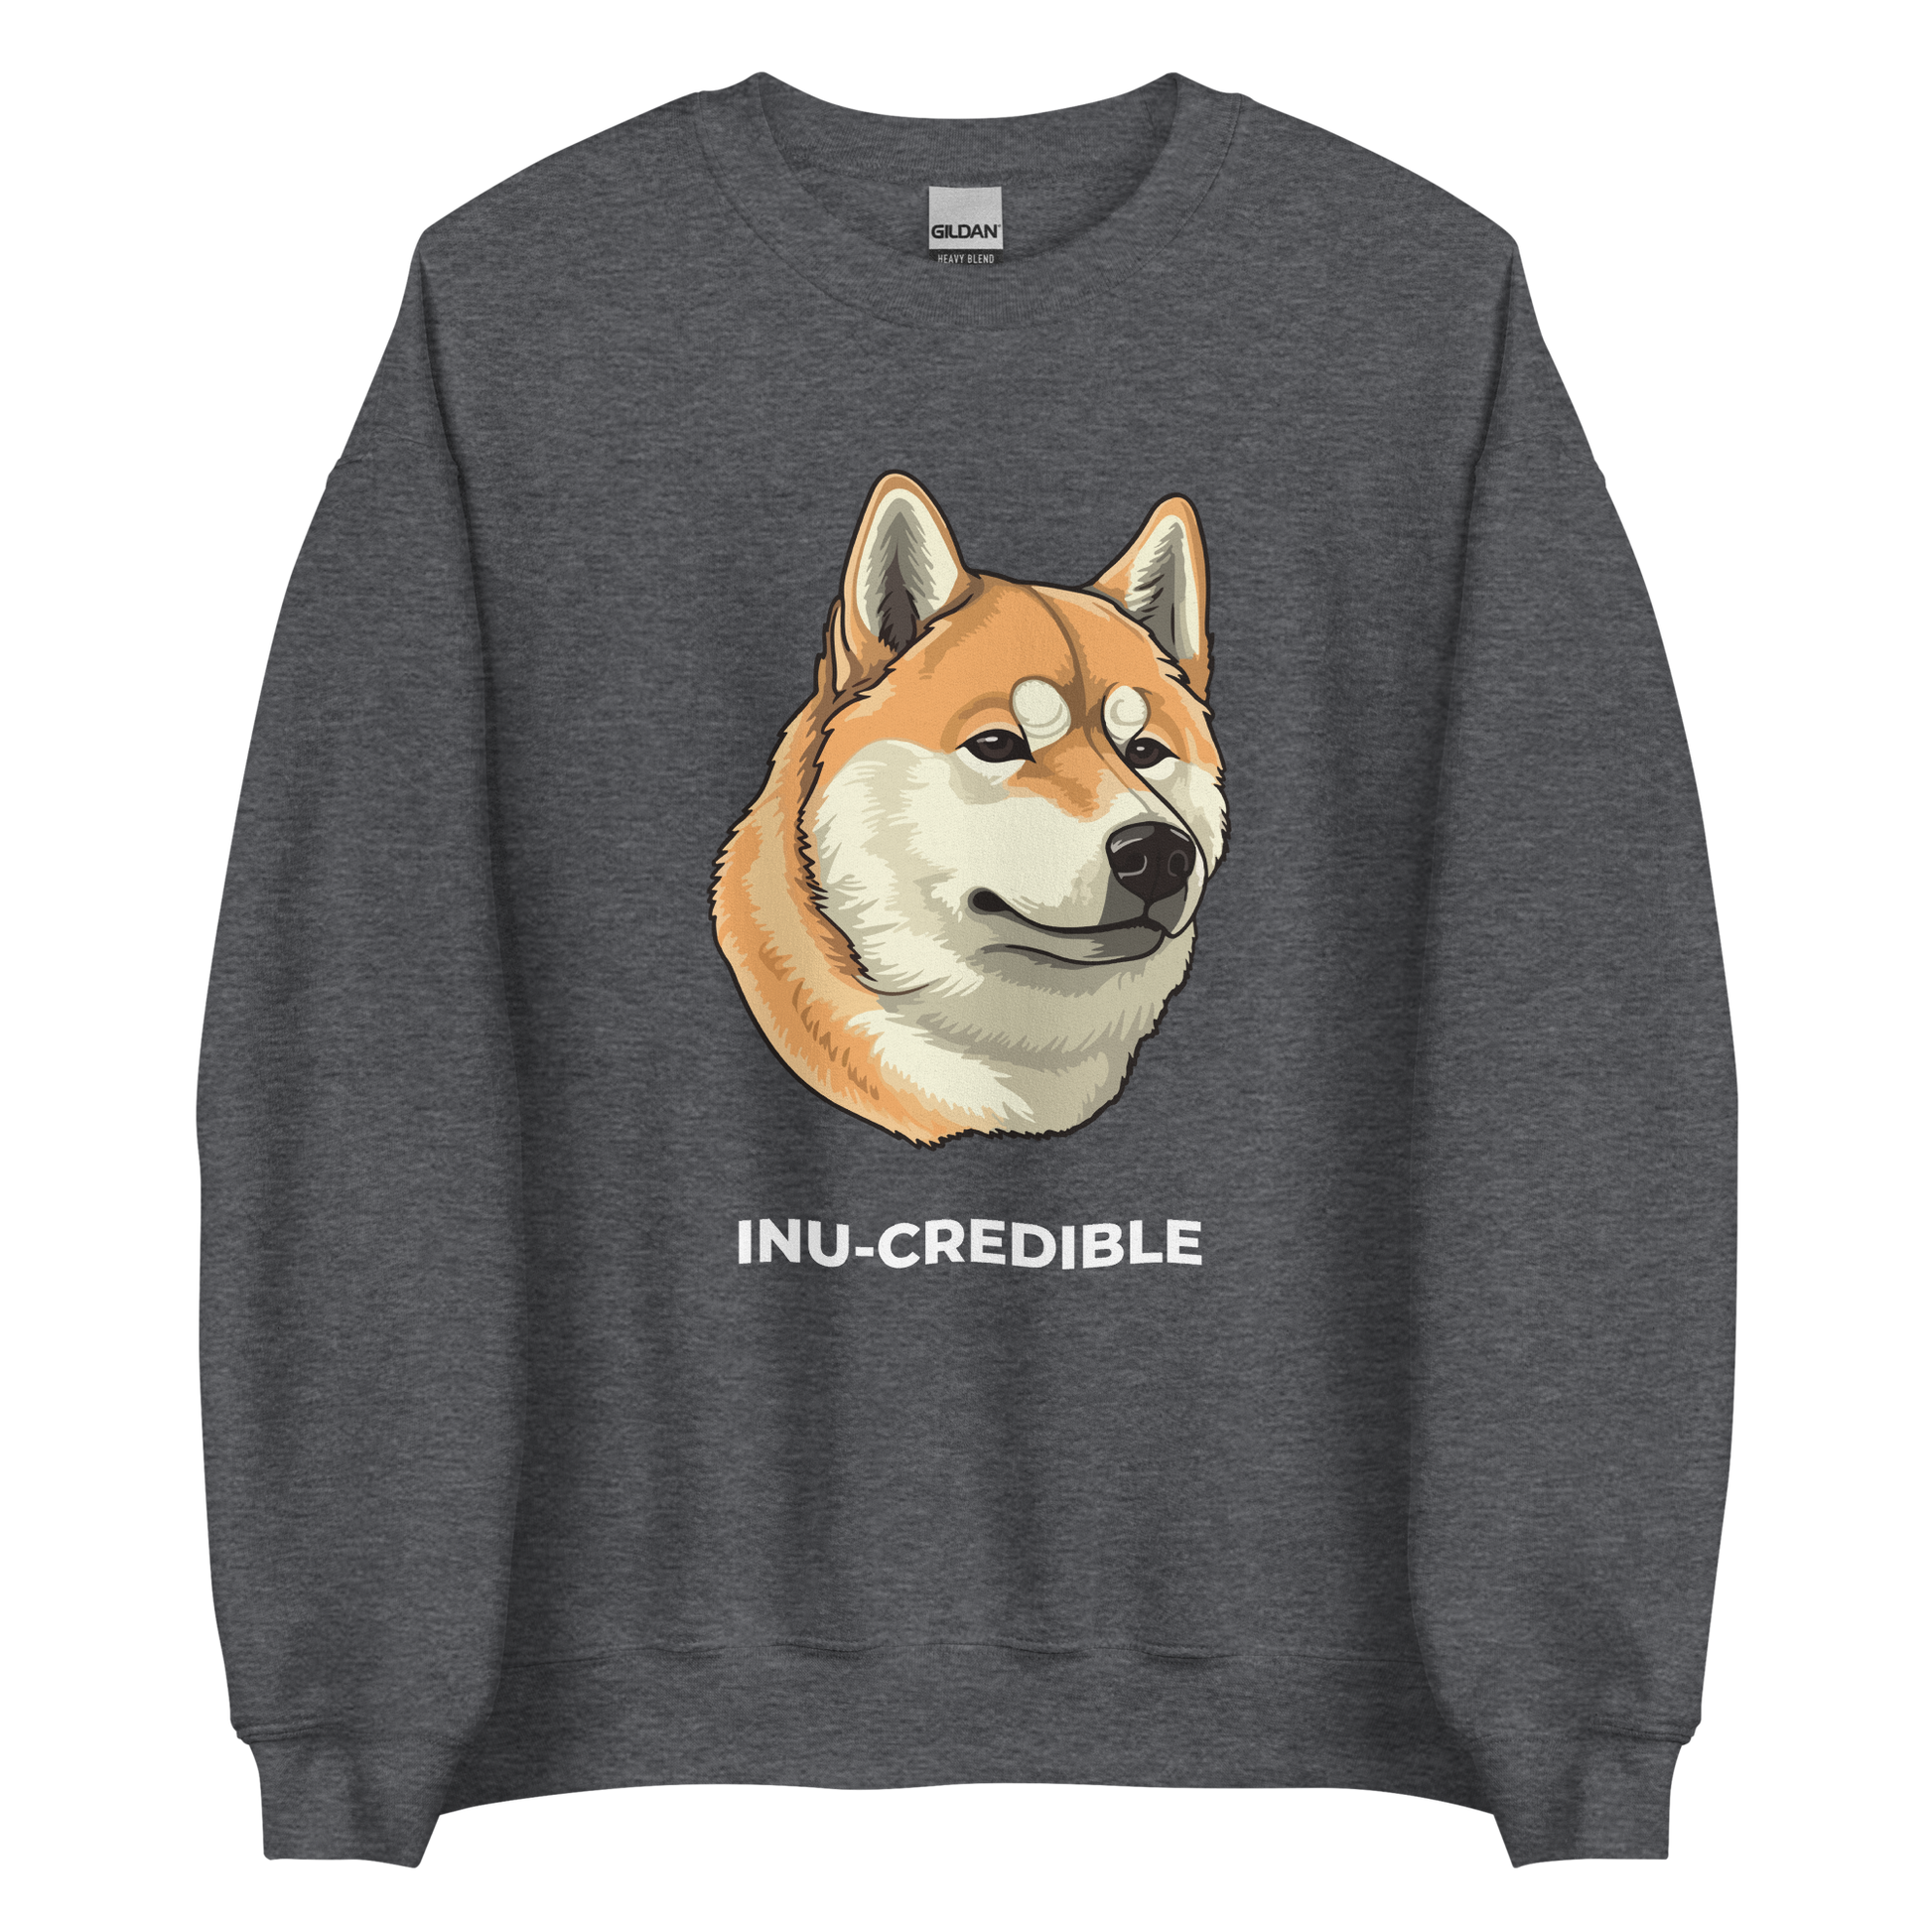 Dark Heather Shiba Inu Sweatshirt featuring the Inu-Credible graphic on the chest - Funny Graphic Shiba Inu Sweatshirts - Boozy Fox